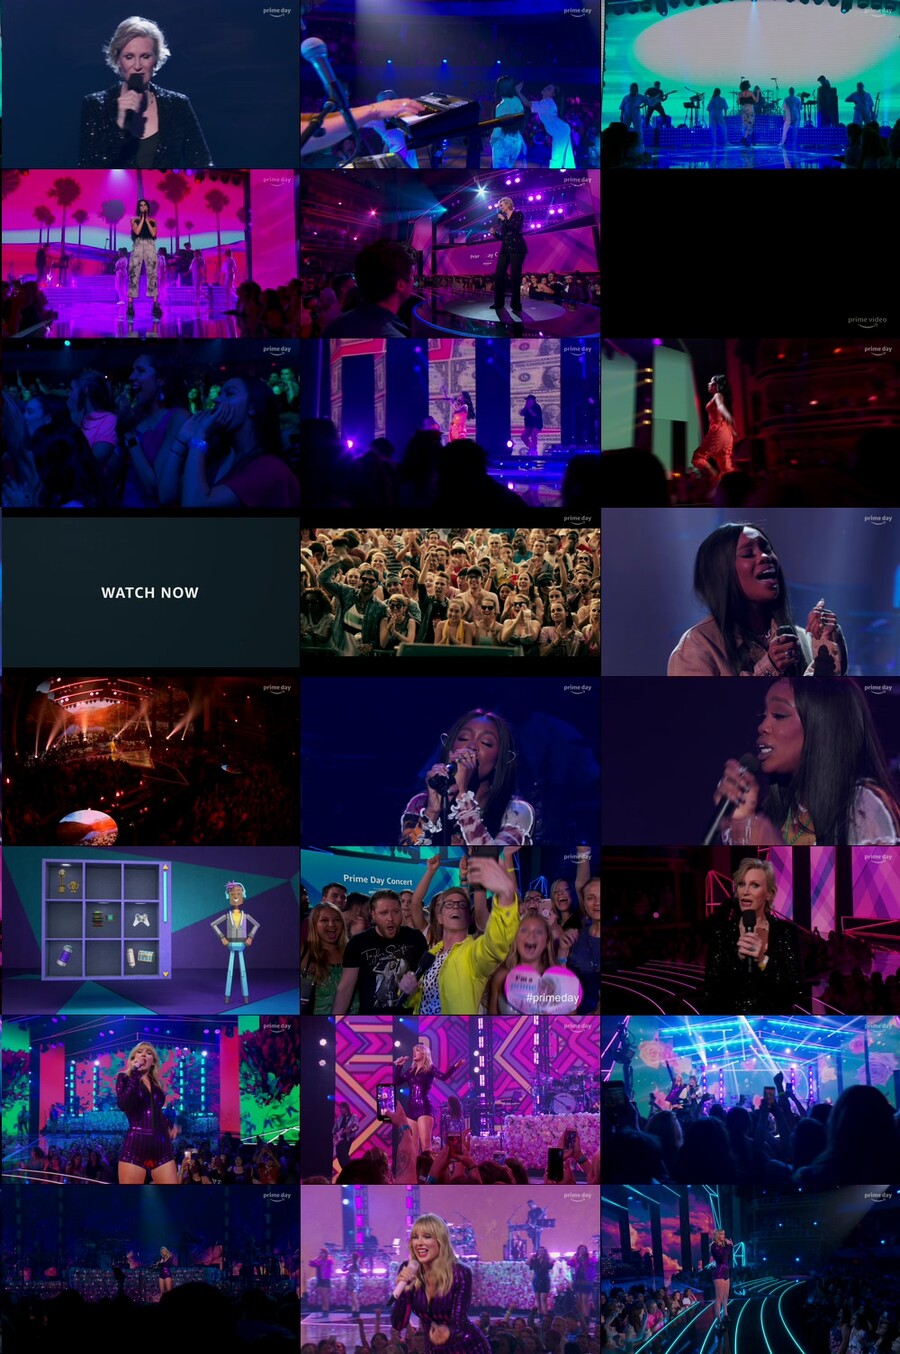 Amazon Prime Day Concert 2019 亚马逊音乐节全场 (Taylor Swift, Dua Lipa, Becky G…) 1080P-HDTV [TS 34.4G]Blu-ray、欧美演唱会、蓝光演唱会16